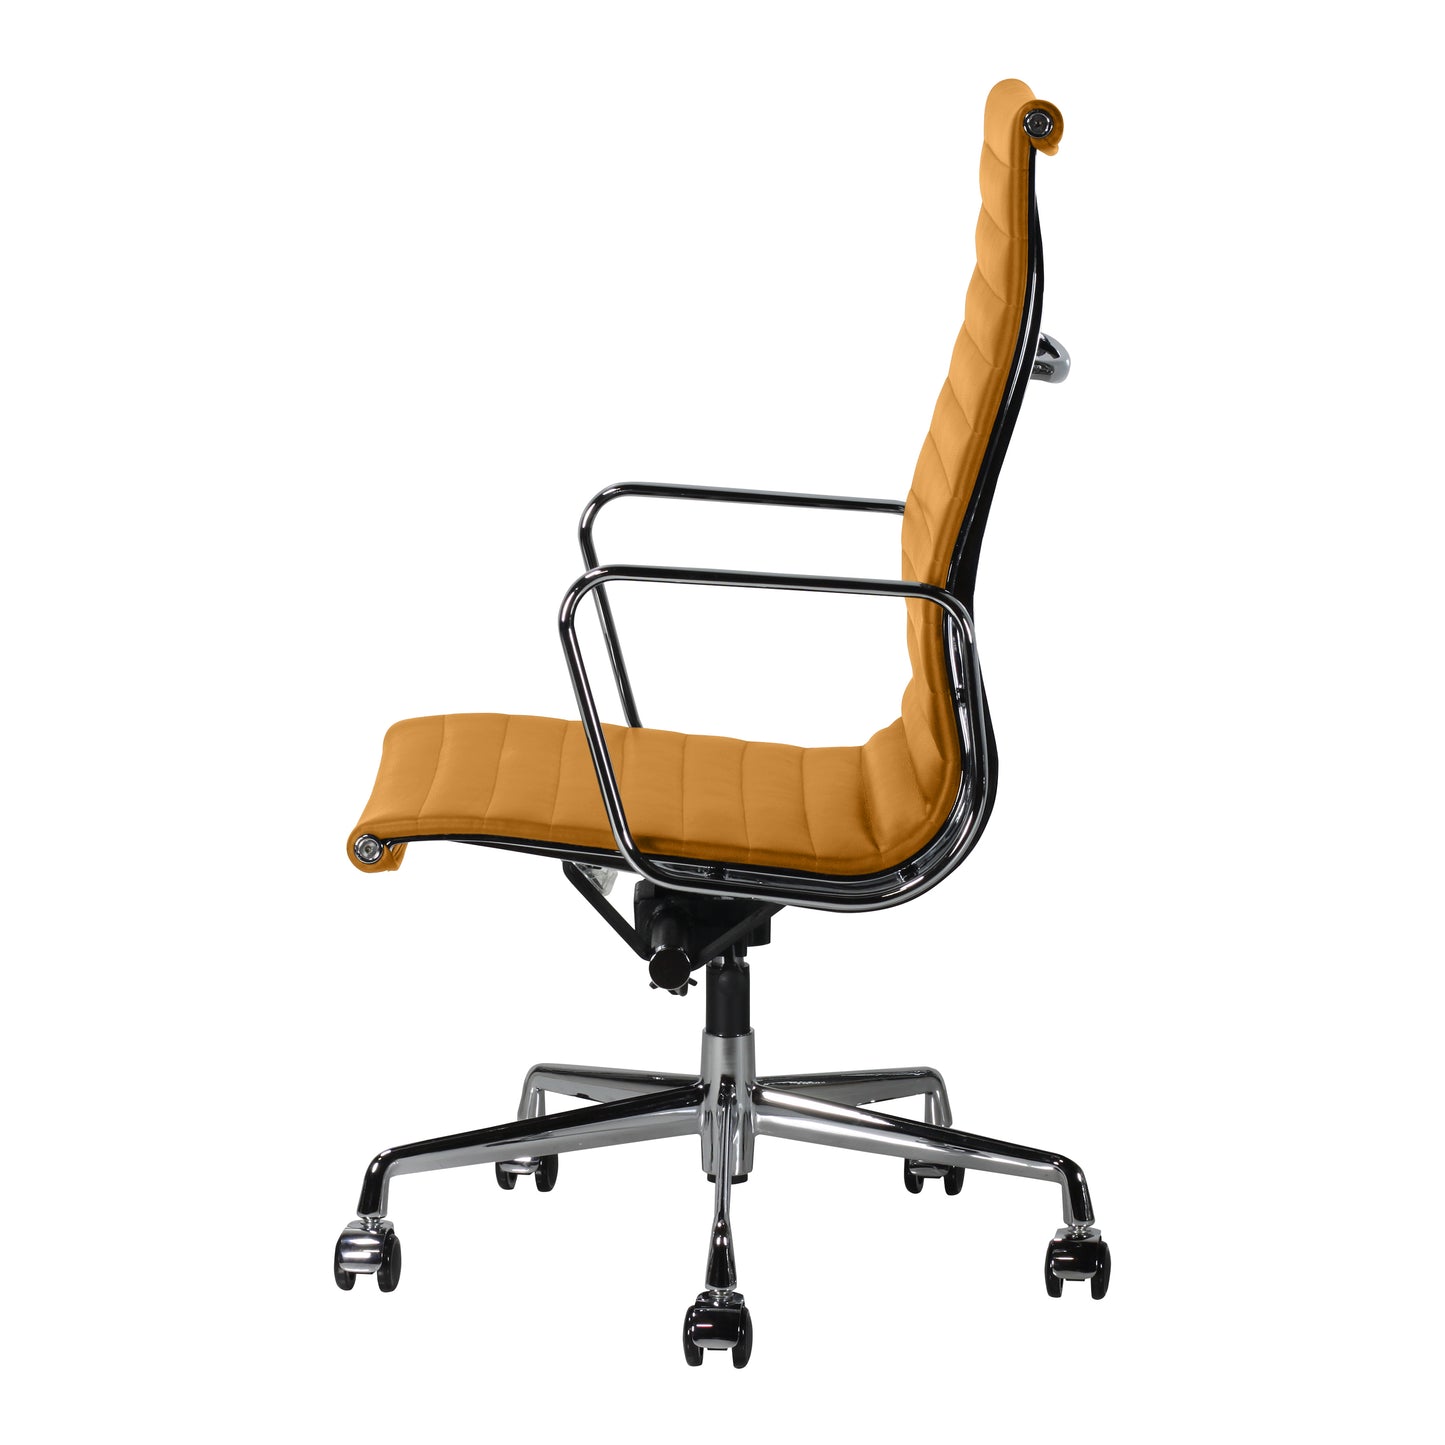 High-backrest chair aluminium style | Cognac Leather | Side